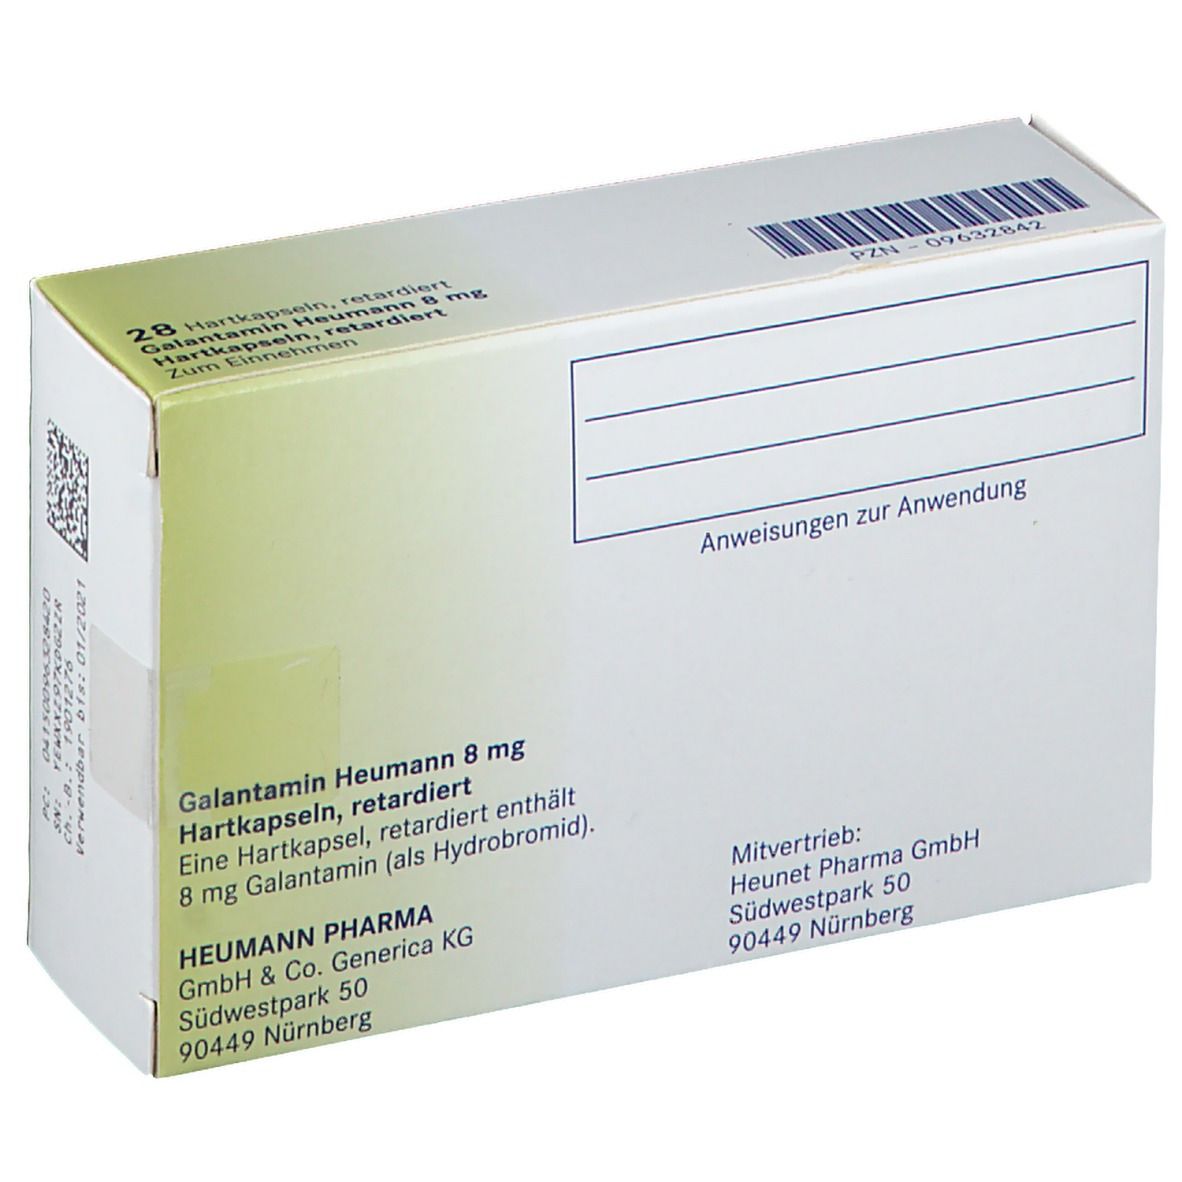 Galantamin Heumann 8 mg